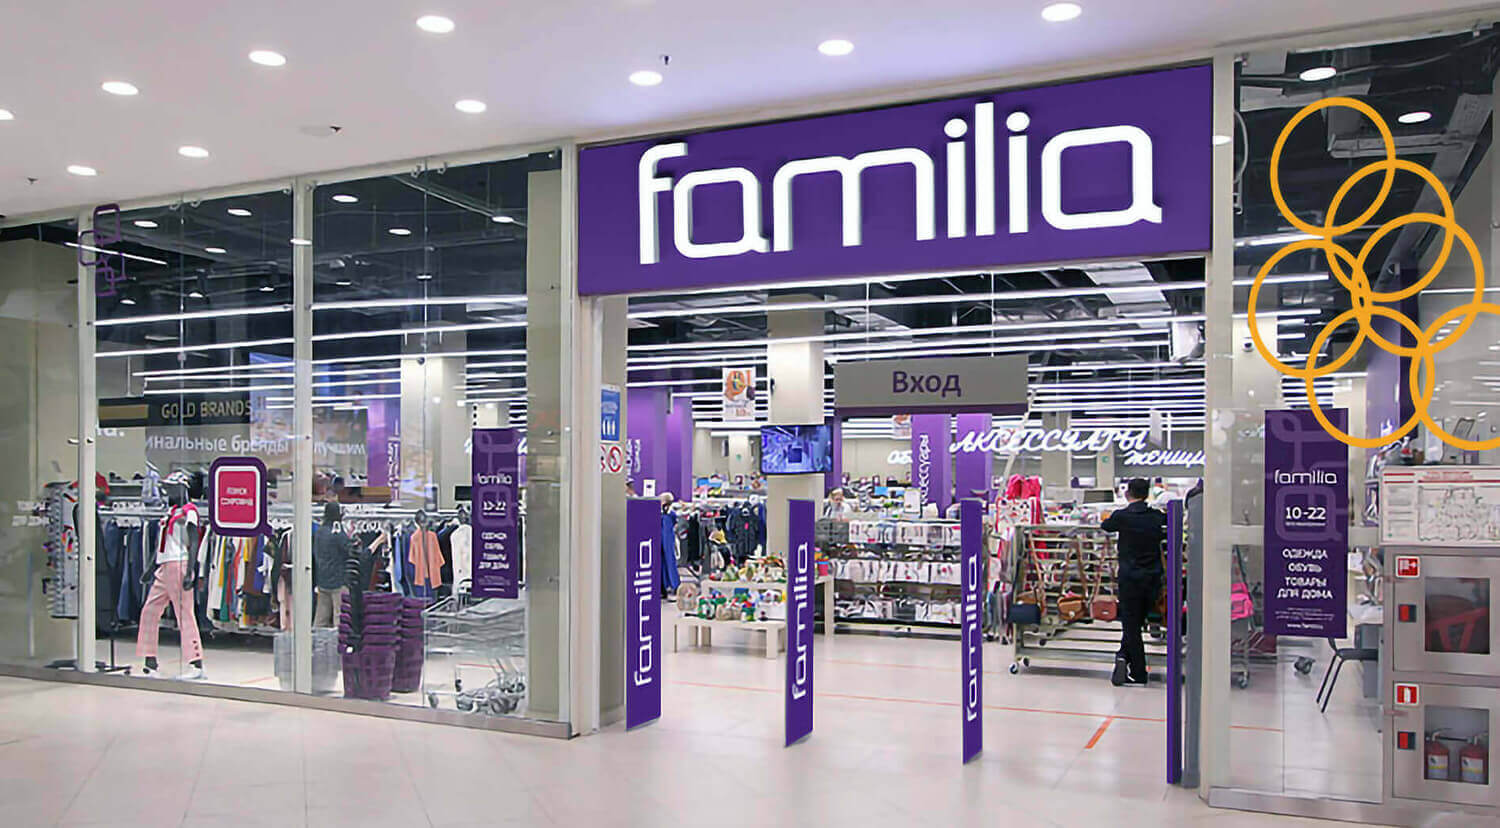 Familia fashion store Russia, Shop Front Fascia Signage, Retail Branding, Store Interior Design, Graphic Communications - CampbellRigg Agency